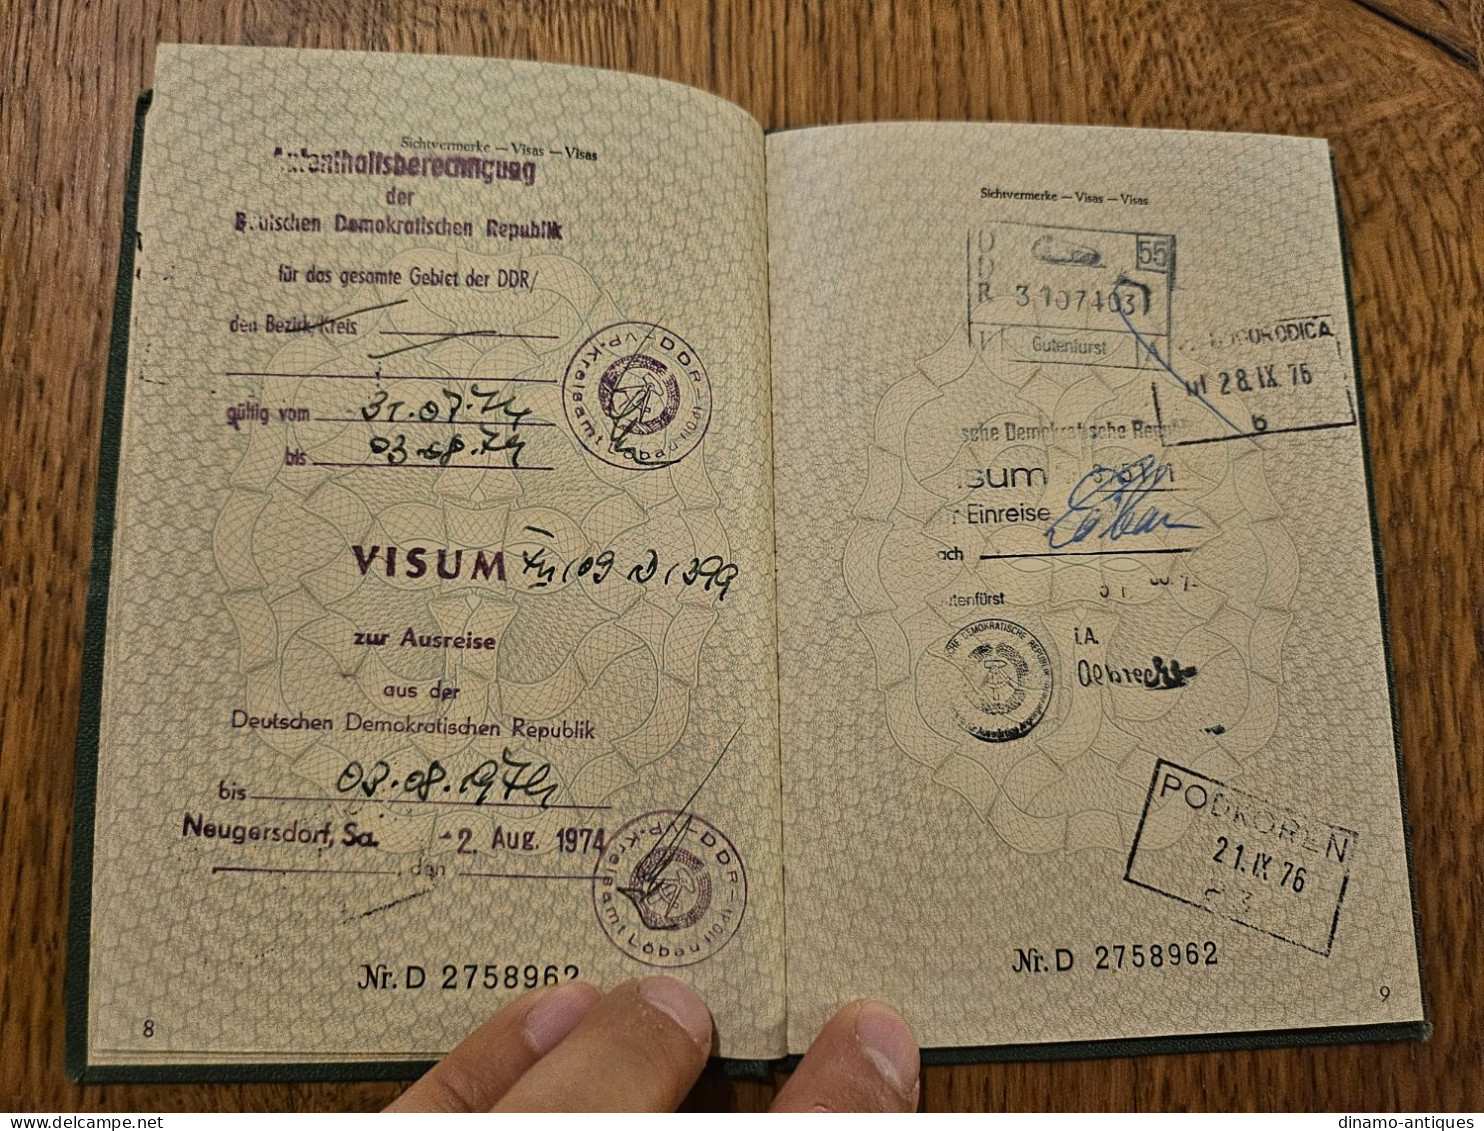 1974 Germany passport reisepass issued in Gerlingen - full of DDR Greece Bulgaria Yugoslavia Czechoslovakia visas